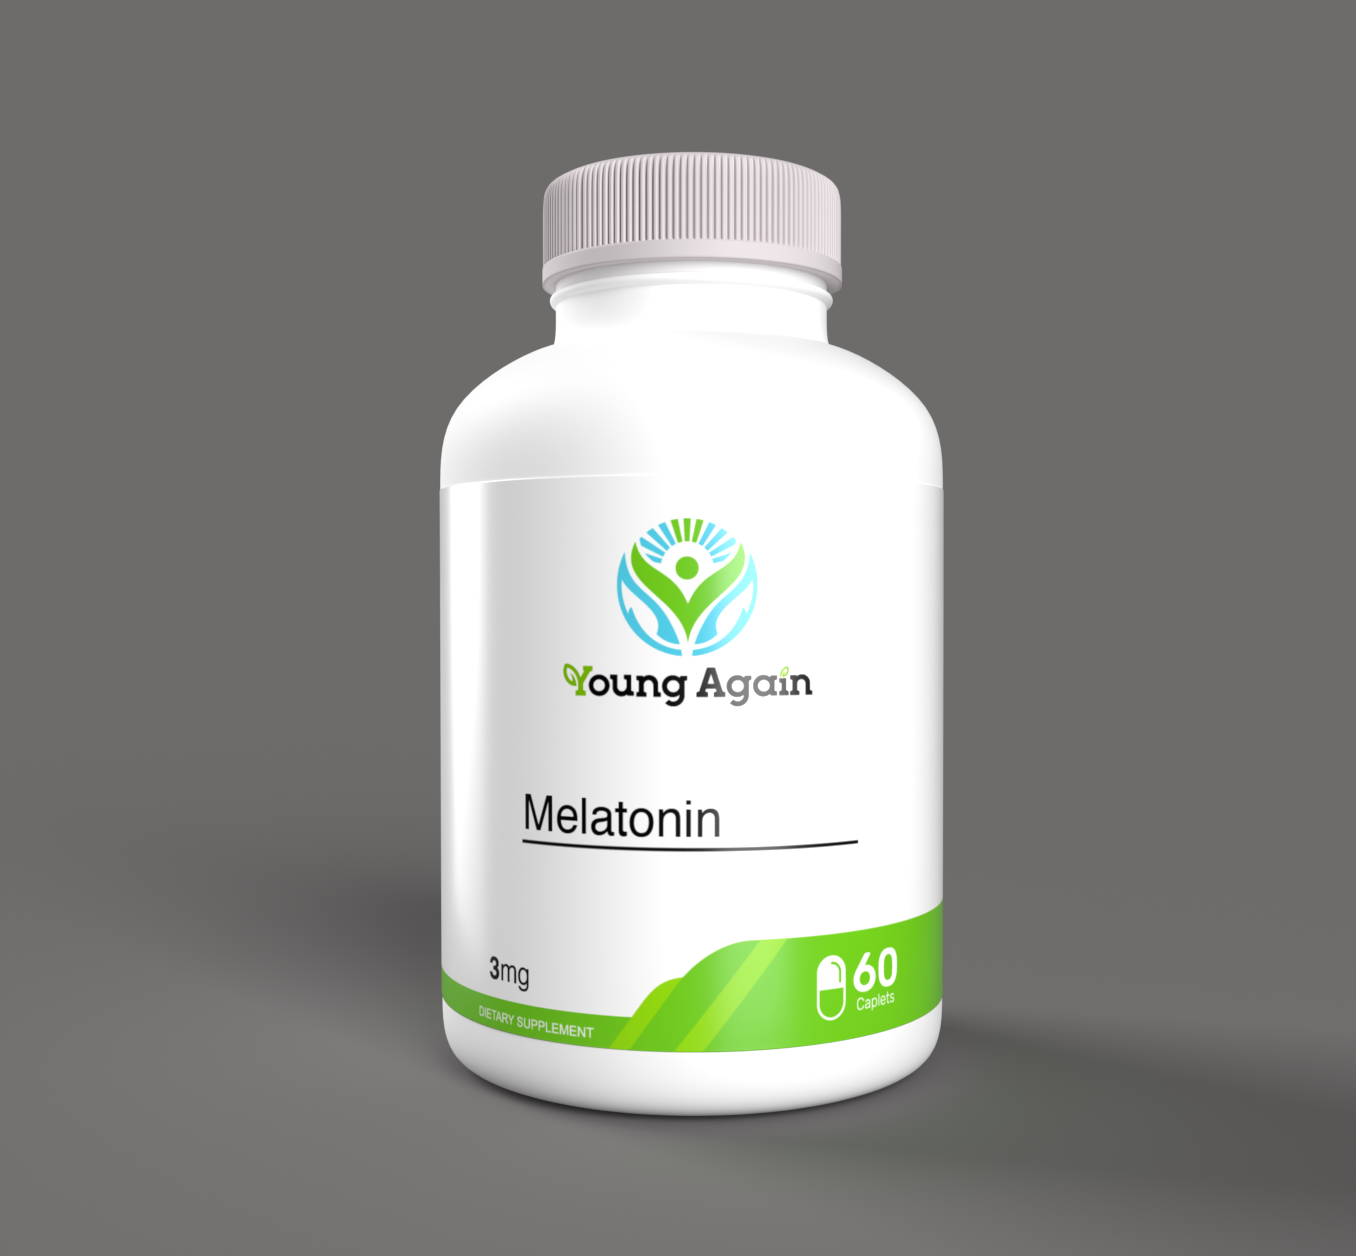 Melatonin supplement